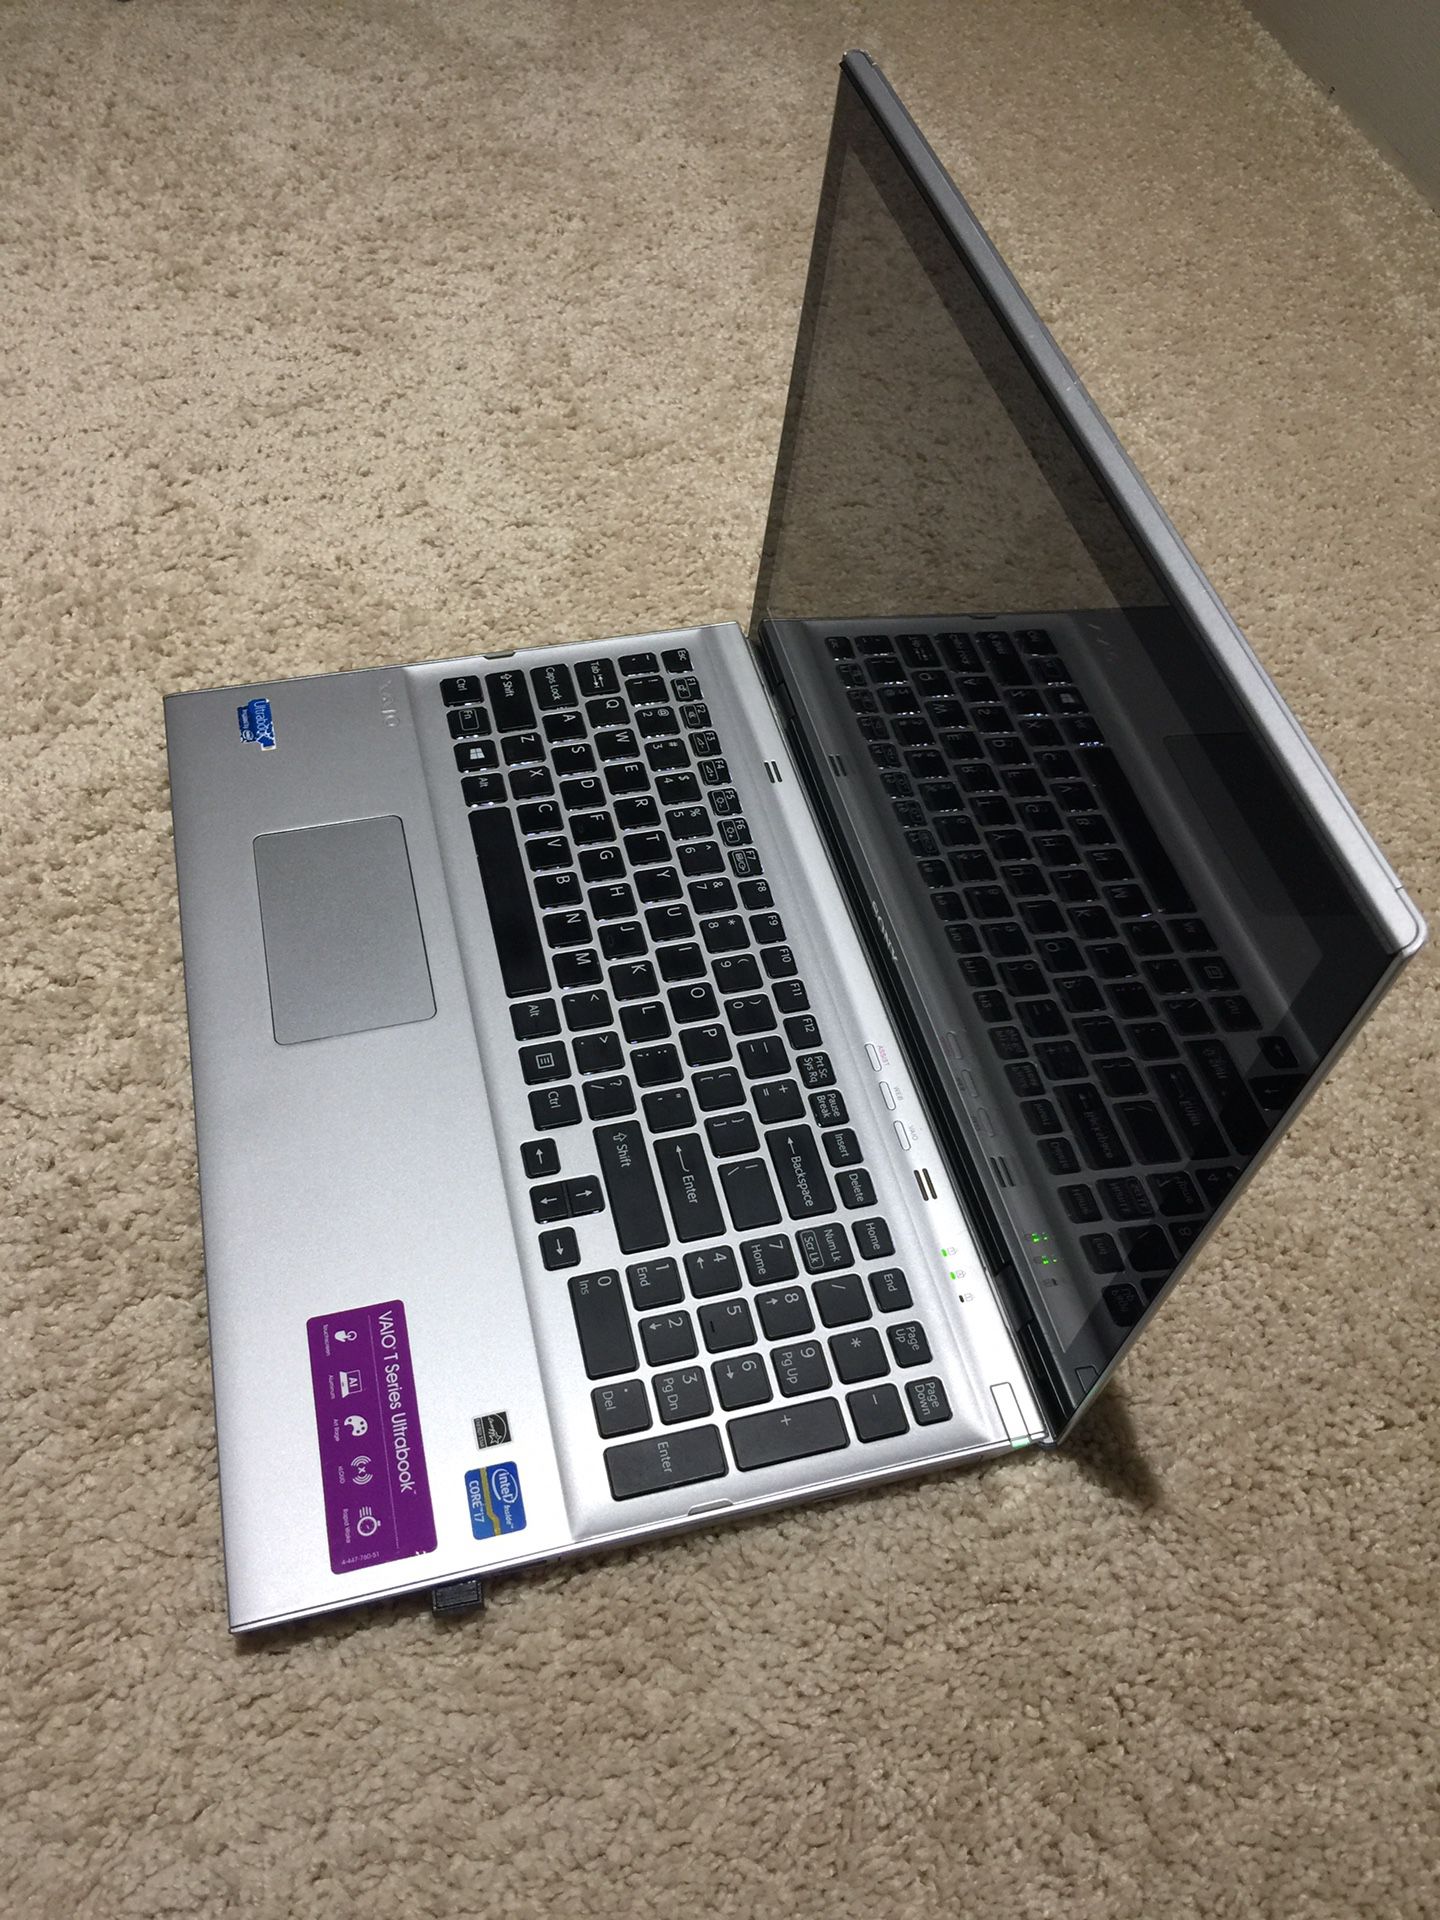 SONY VAIO 17” Laptop i7 CPU, 8GB RAM, 1 TB Hard Drive, Full Touch Screen IPS Panel Window 8 64-bit OS